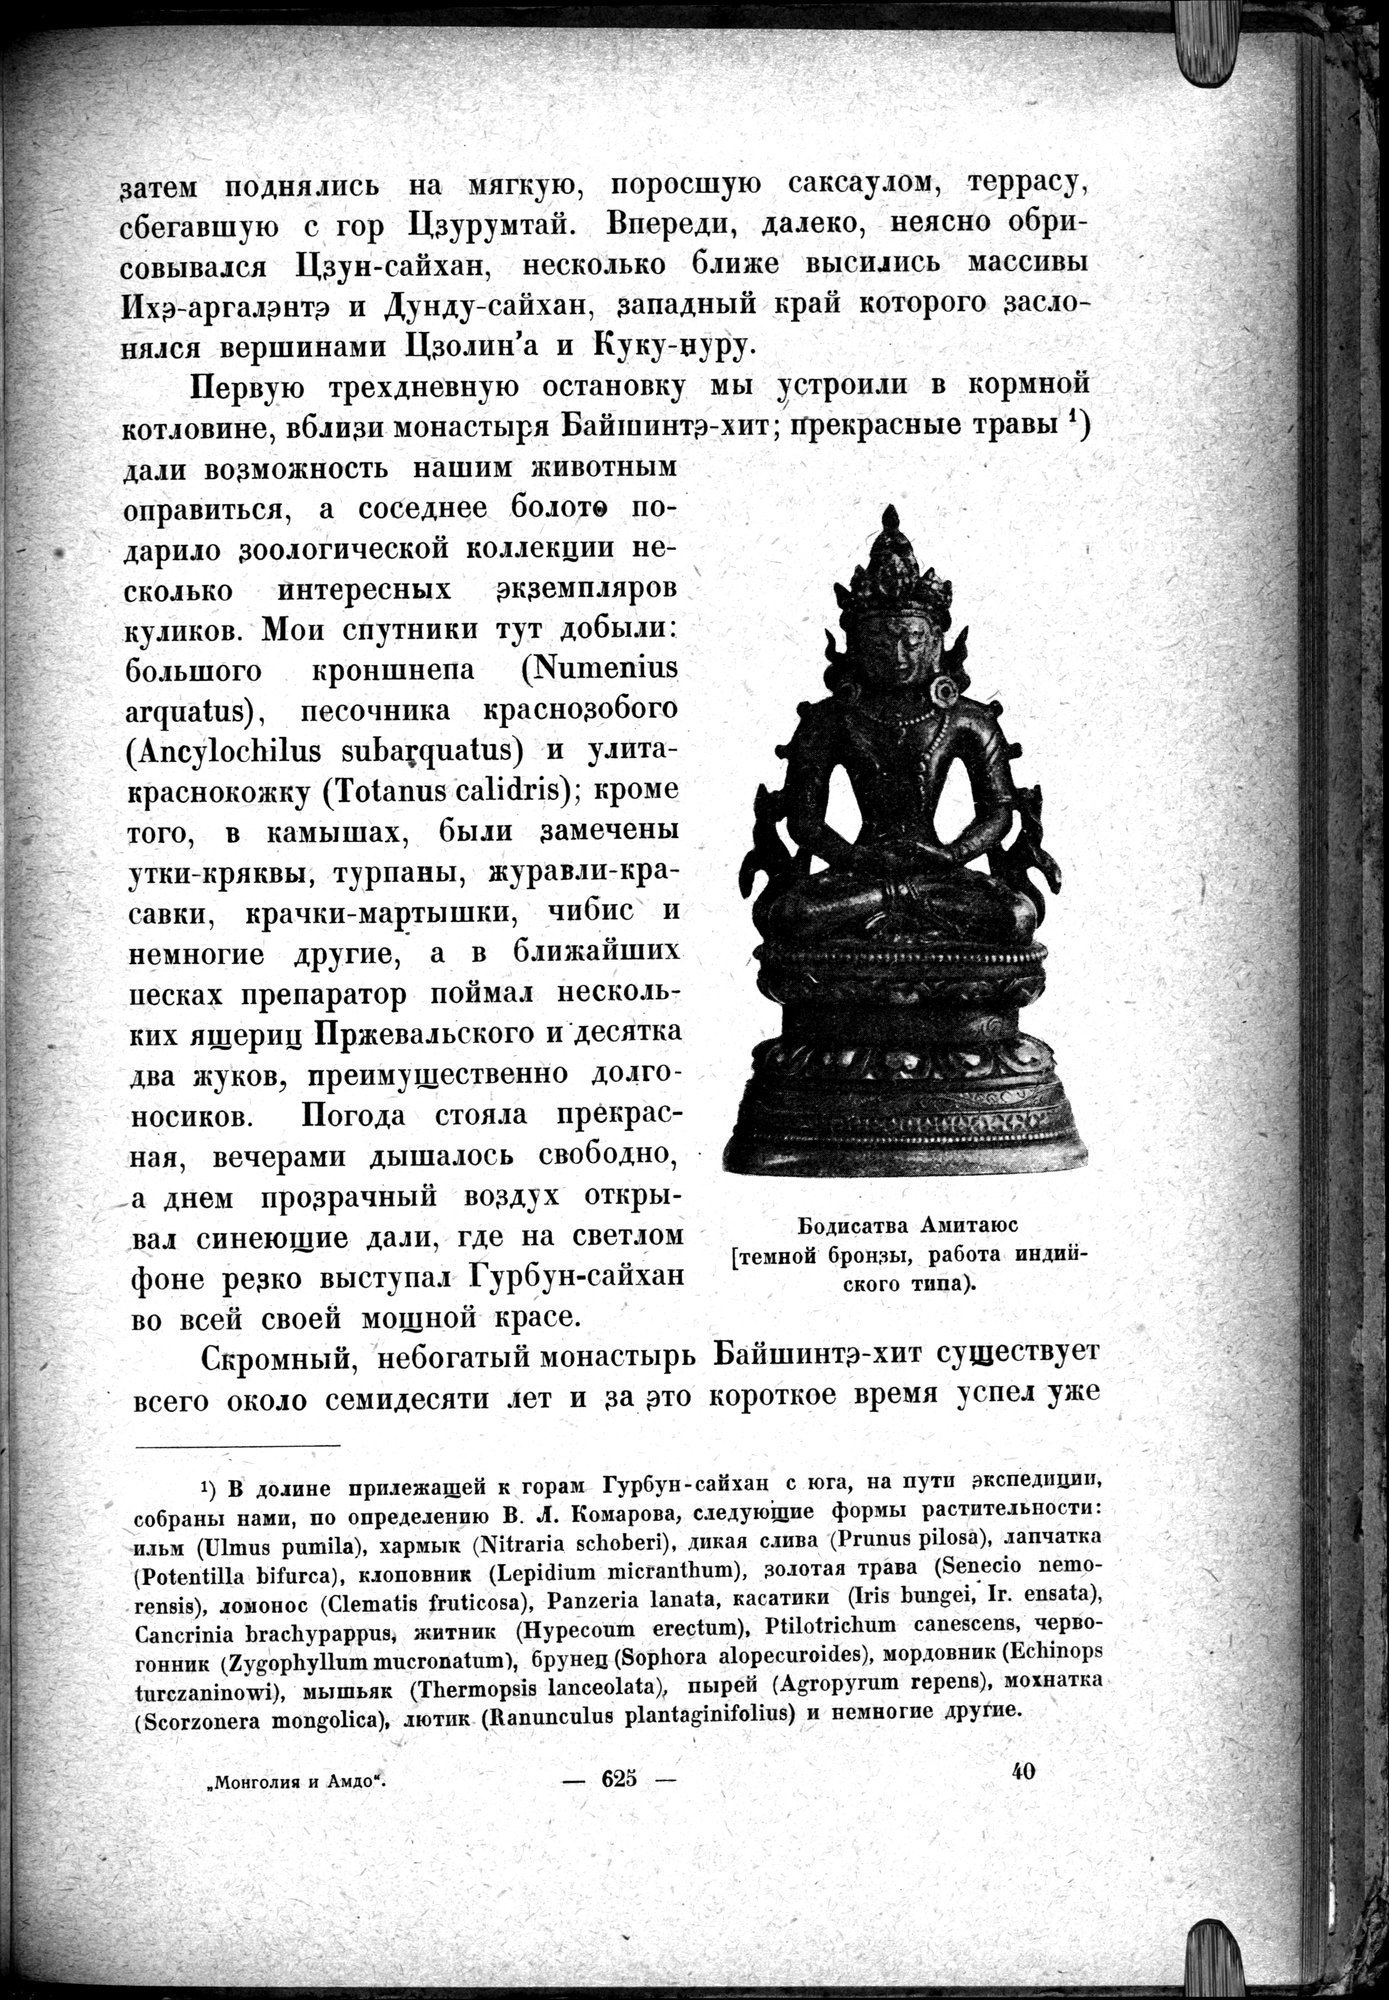 Mongoliya i Amdo i mertby gorod Khara-Khoto : vol.1 / Page 715 (Grayscale High Resolution Image)